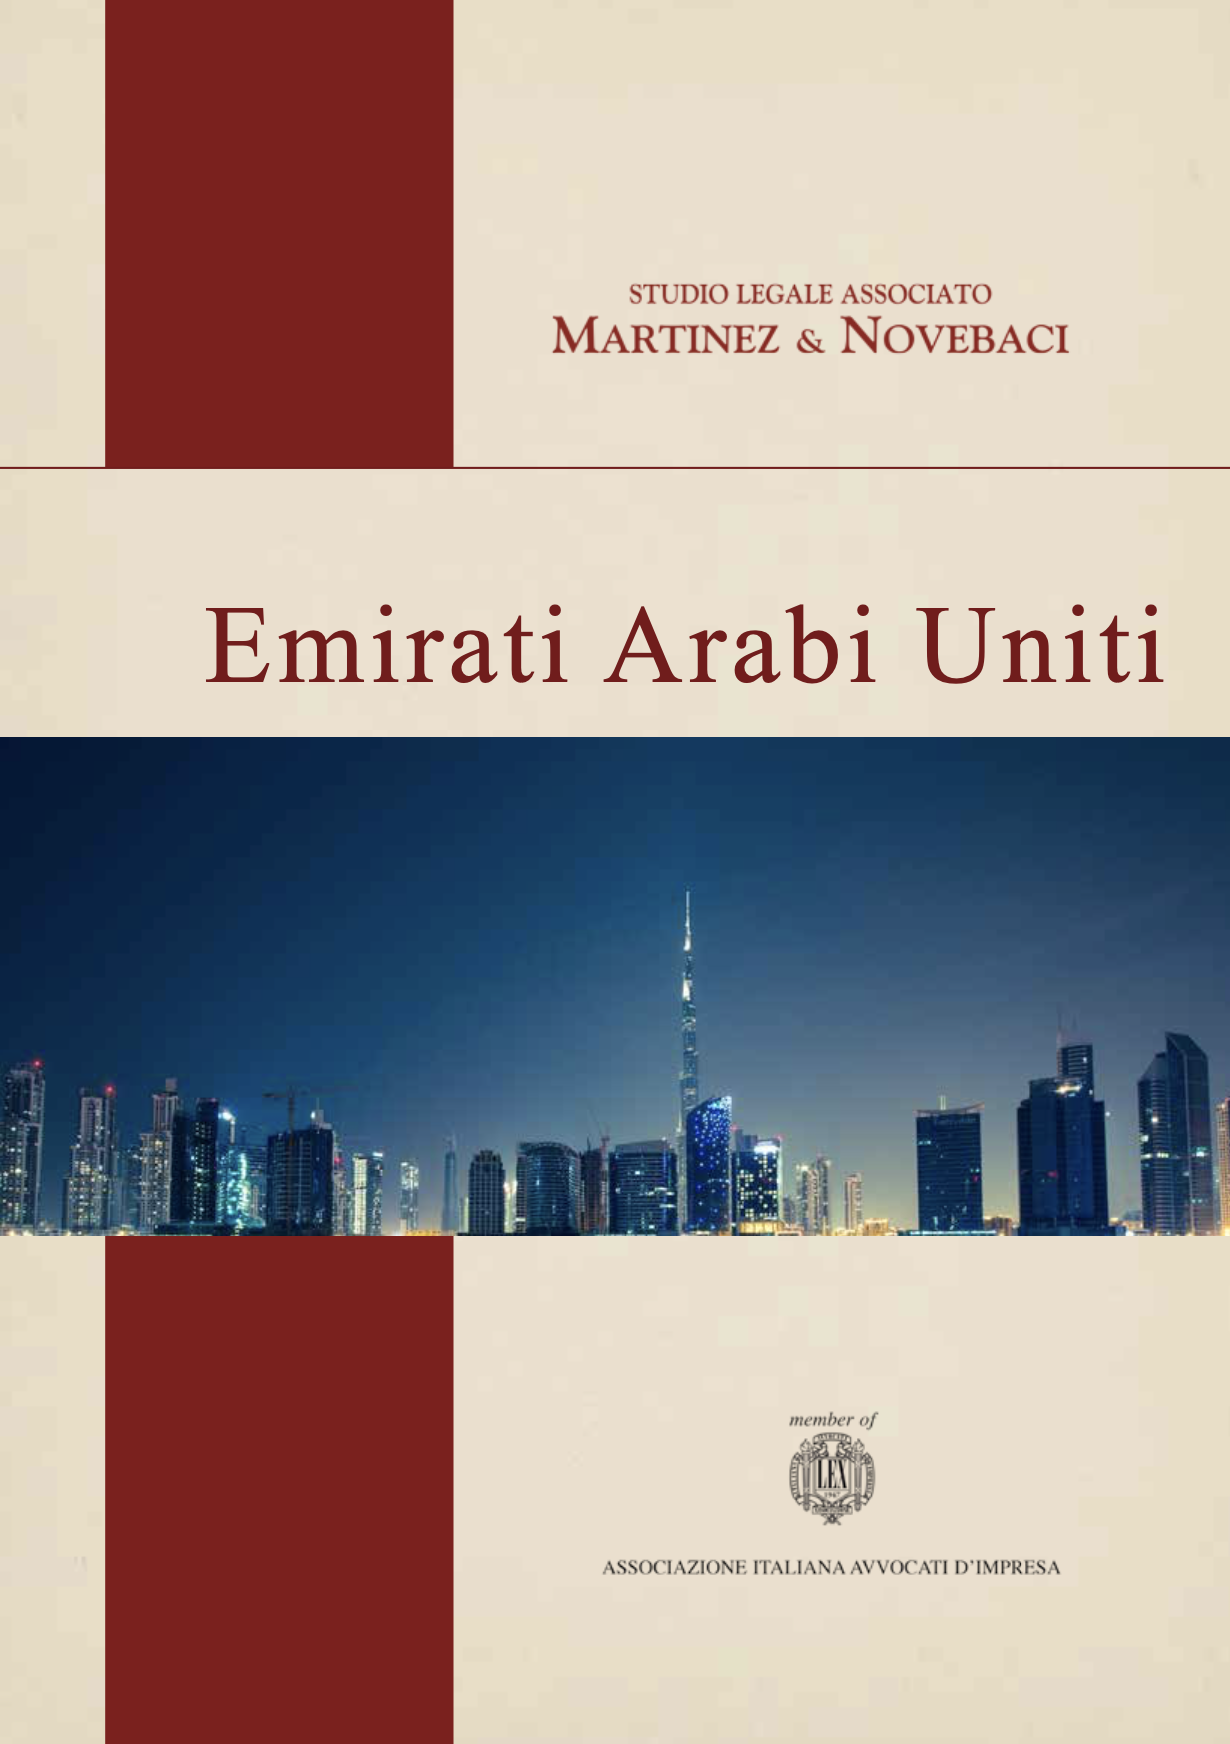 https://www.martinez-novebaci.it/wp-content/uploads/2021/07/emirati.png